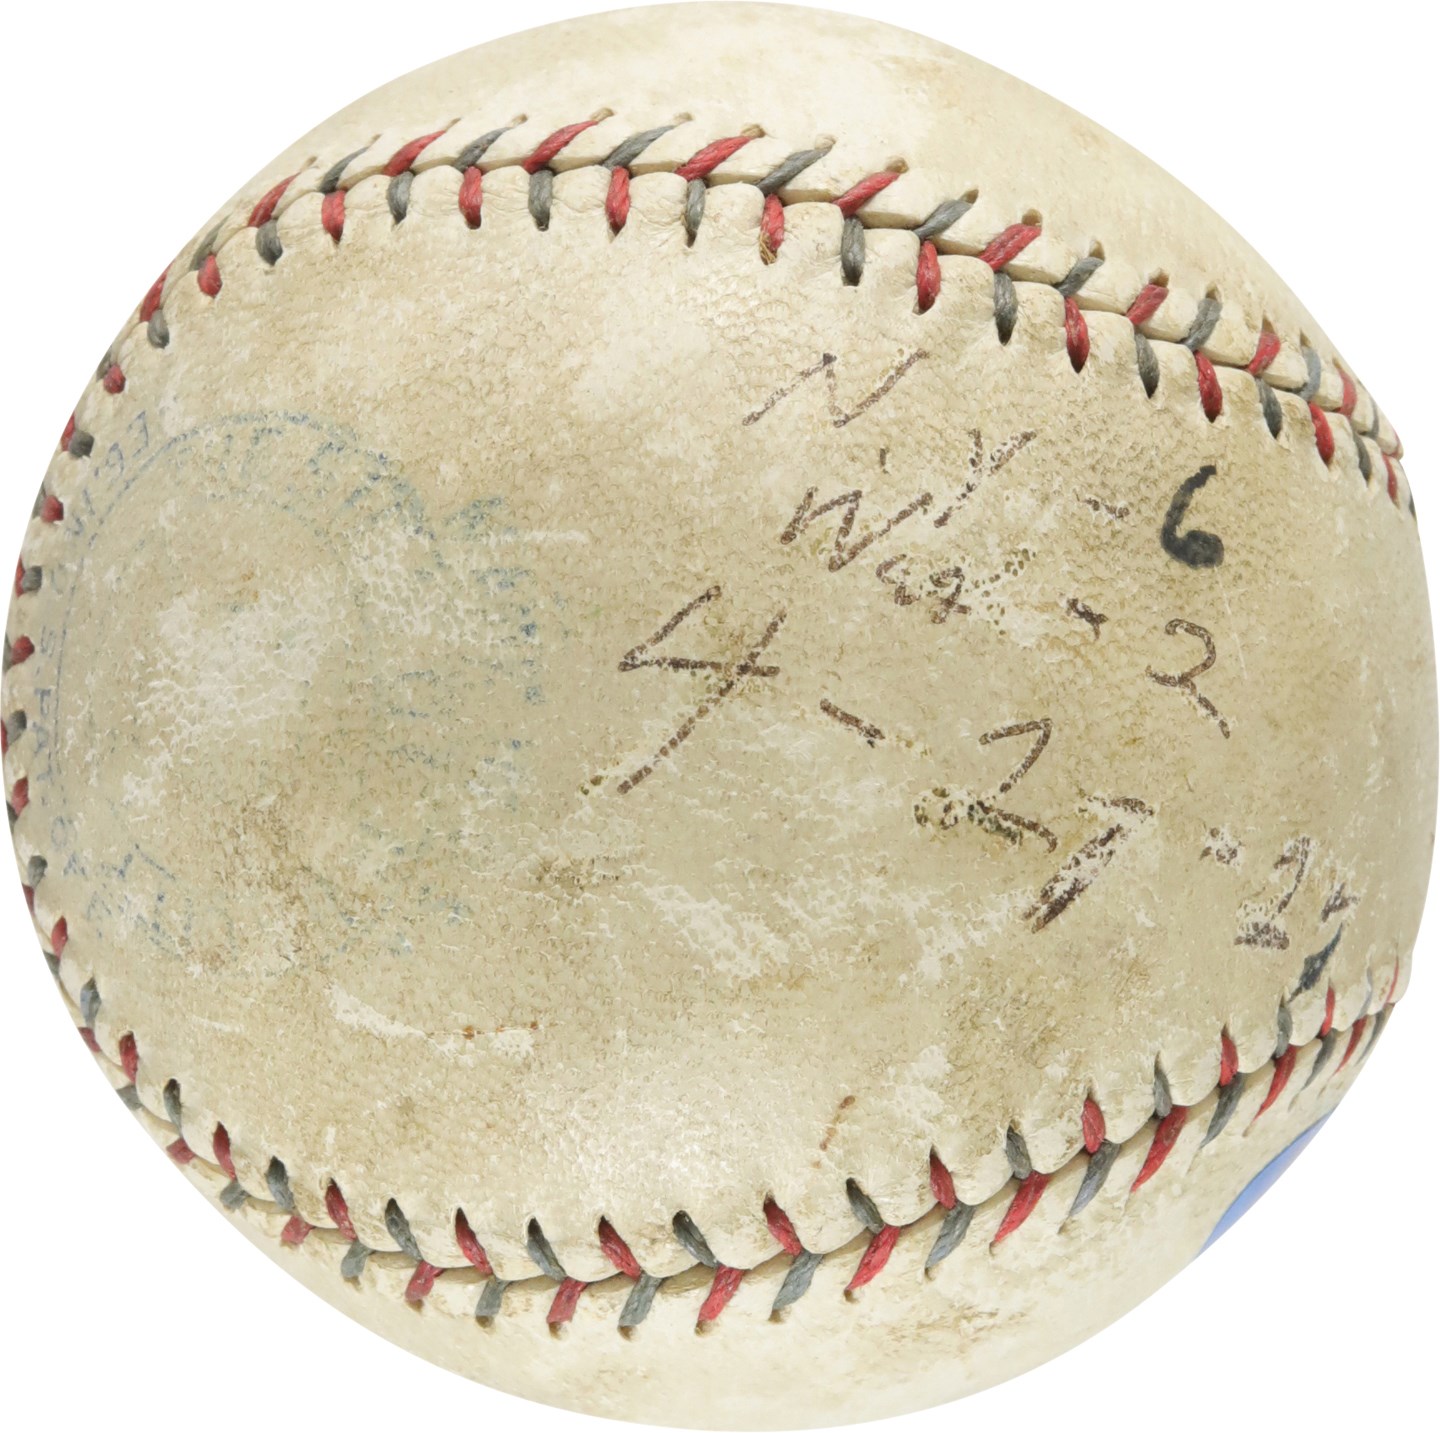 4/24/27 New York Yankees vs Washington Senators Game Used Baseball from Babe Ruth's 359th Home Run Game (MEARS)